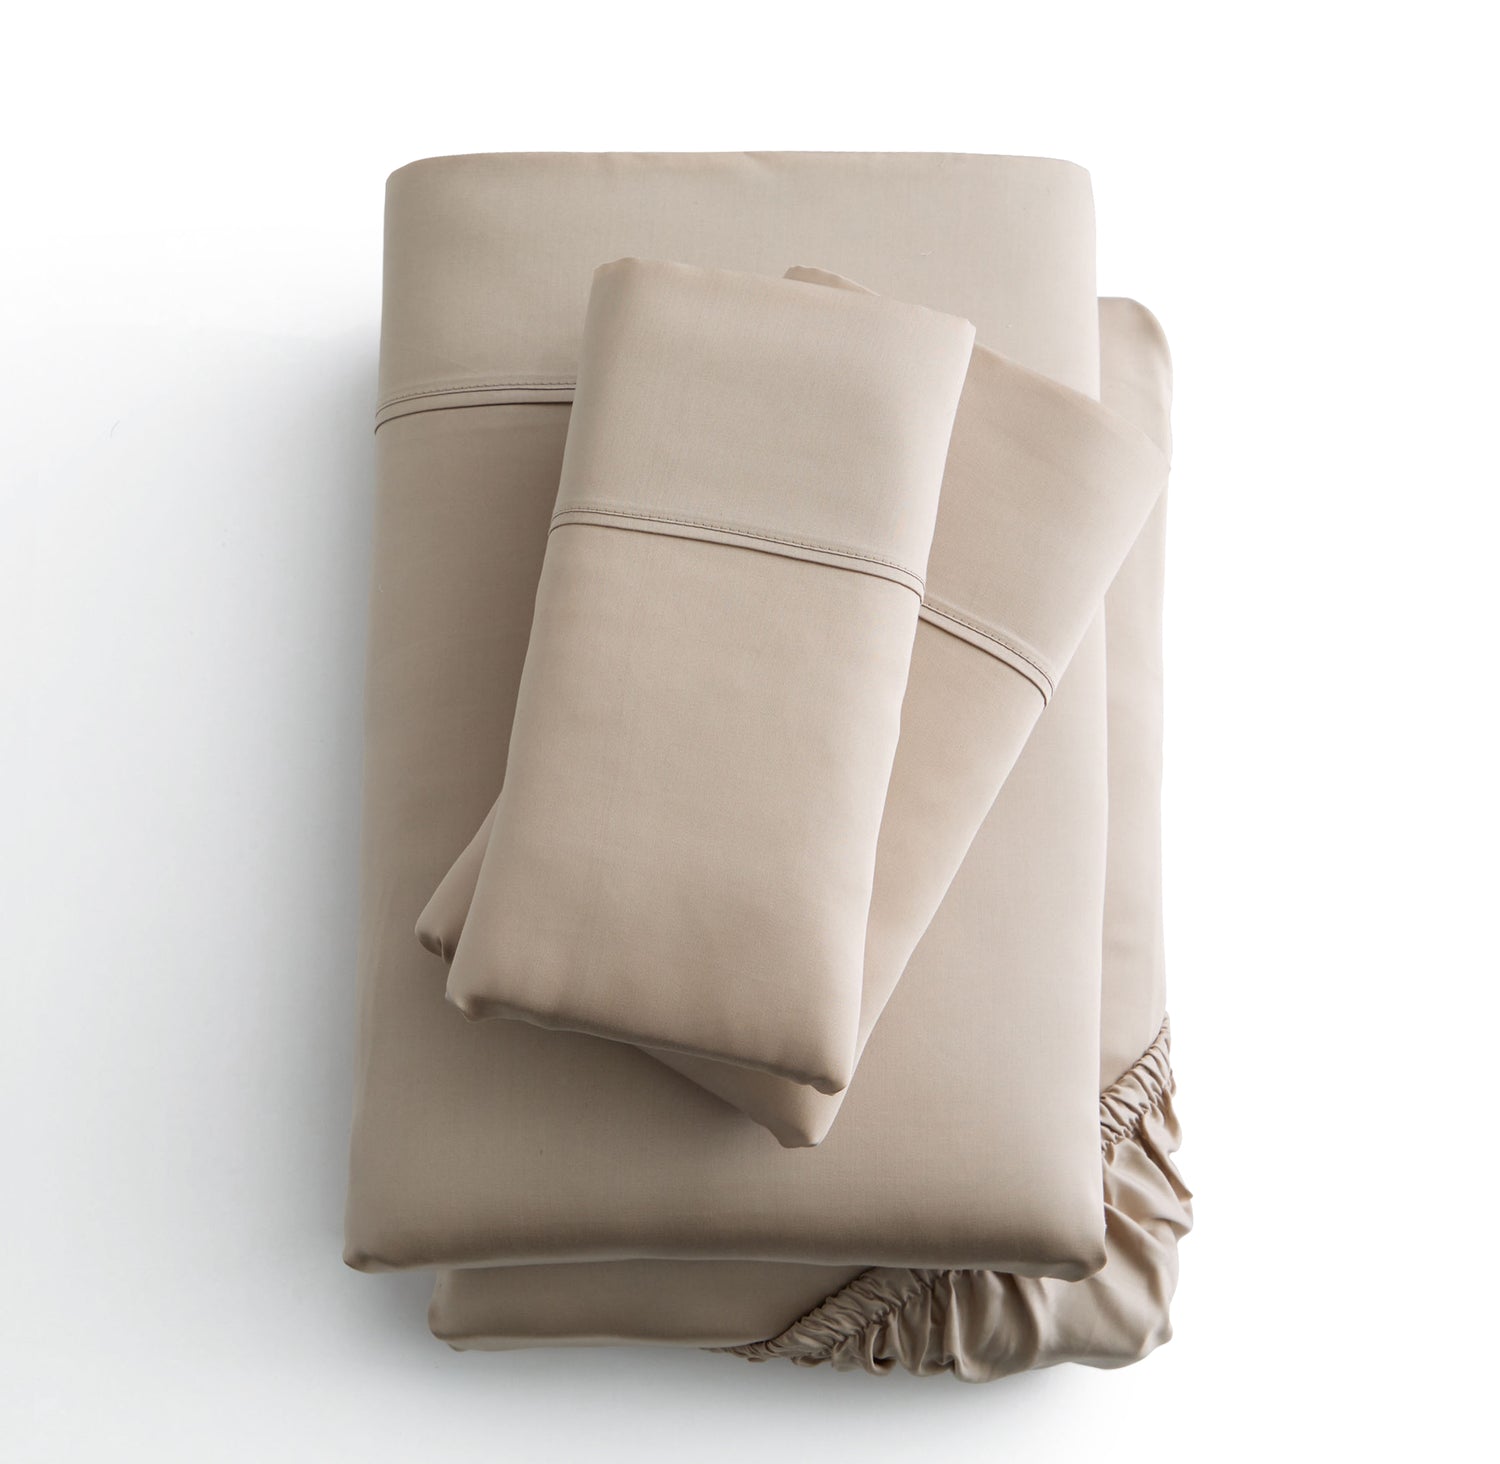 TENCEL Pillowcases And Sheets